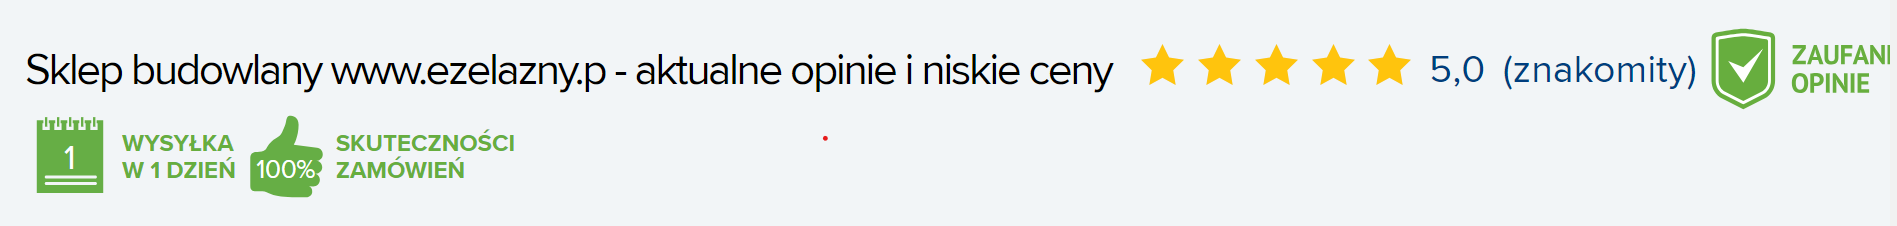 Ezelazny.pl